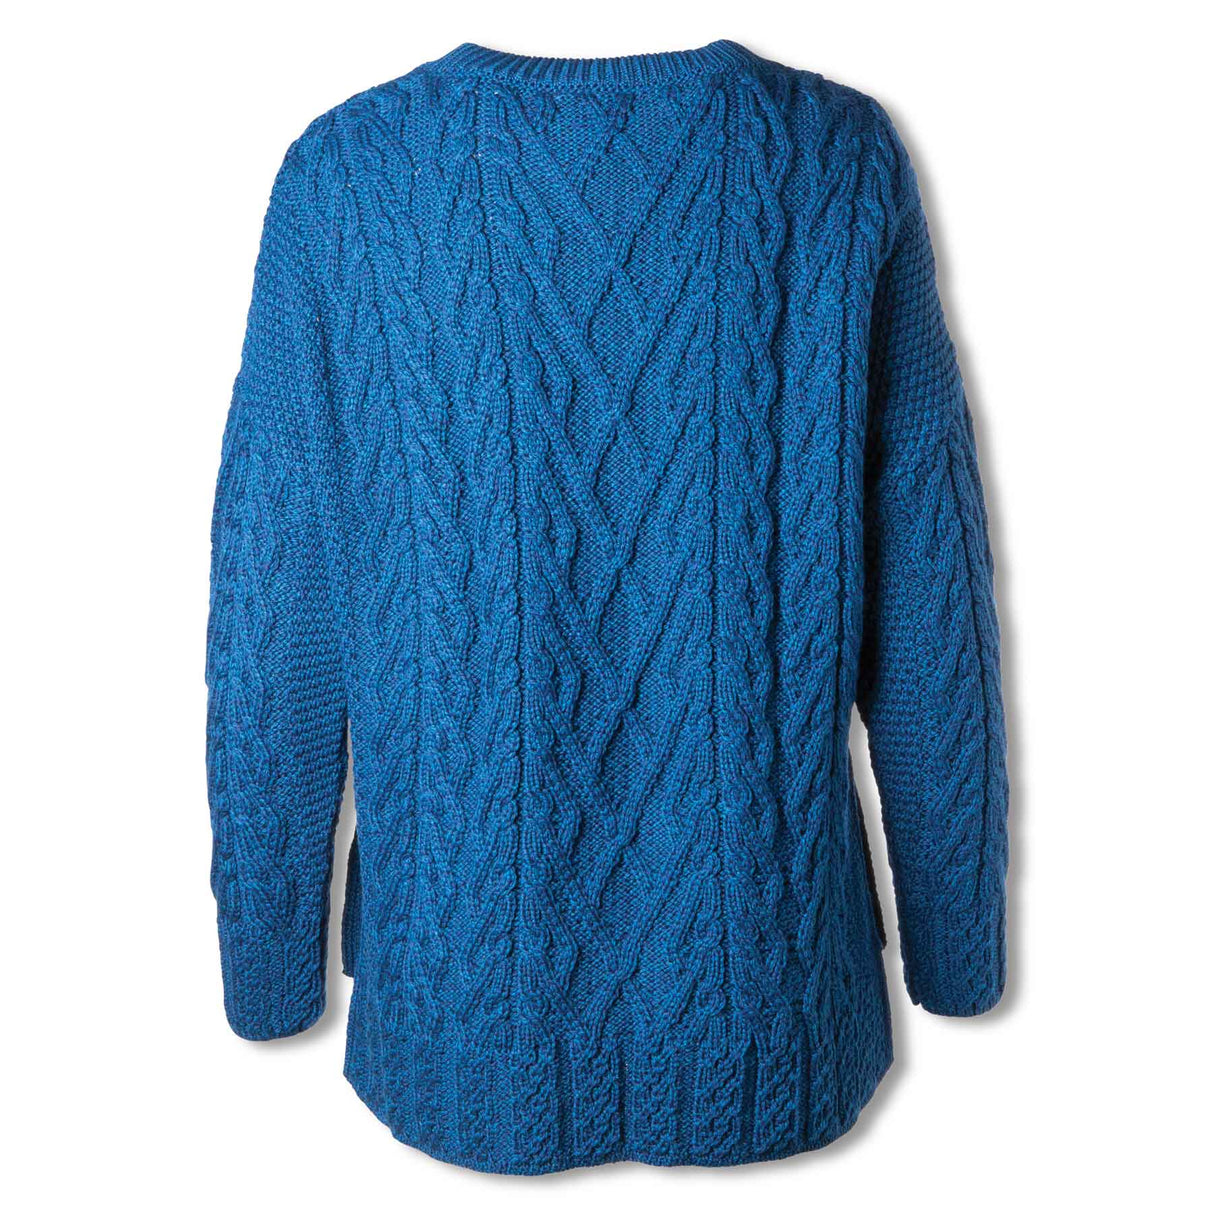 Supersoft Aran Knit Vented Trellis Sweater, Blue - Creative Irish Gifts